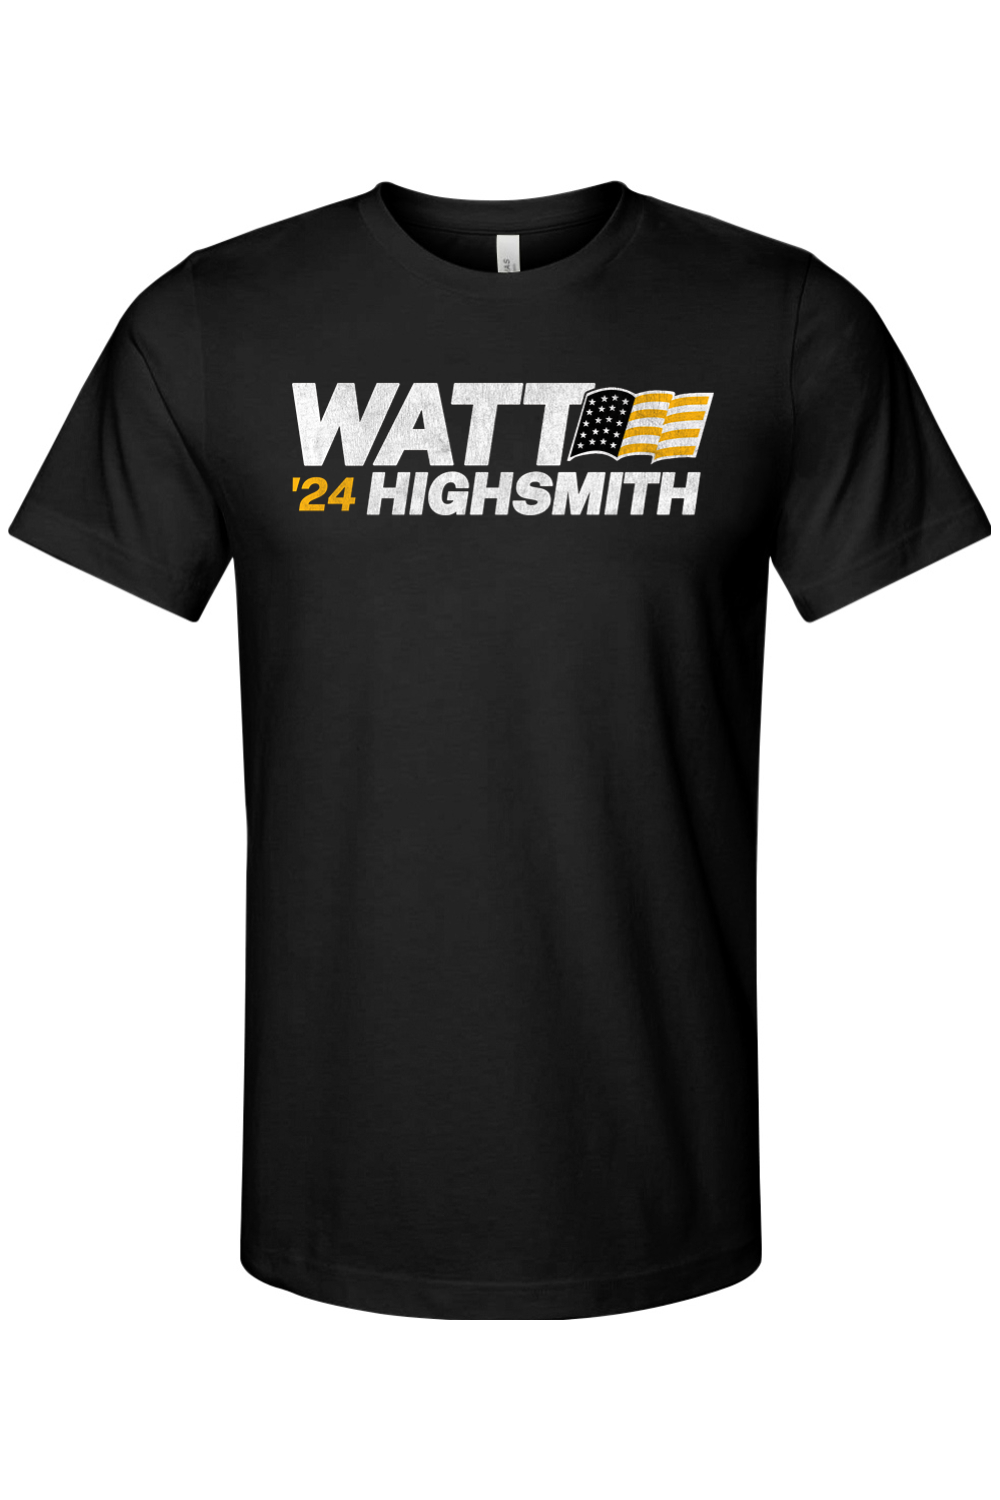 Watt Highsmith '24 - Yinzylvania